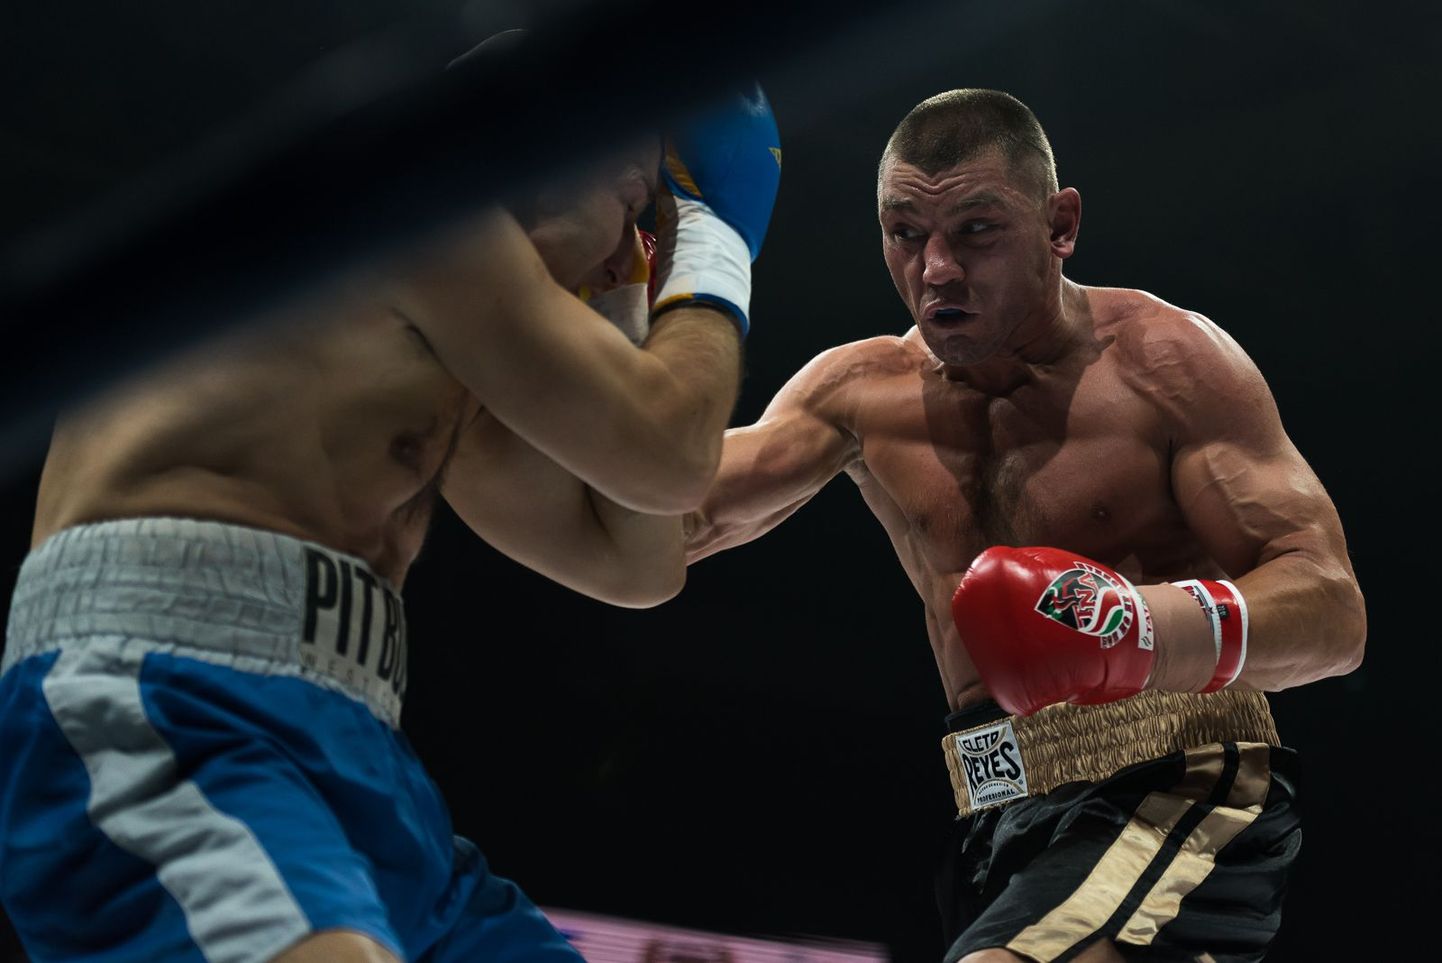 Seitsmes Xplosion Fight Series, Pavel Semjonov